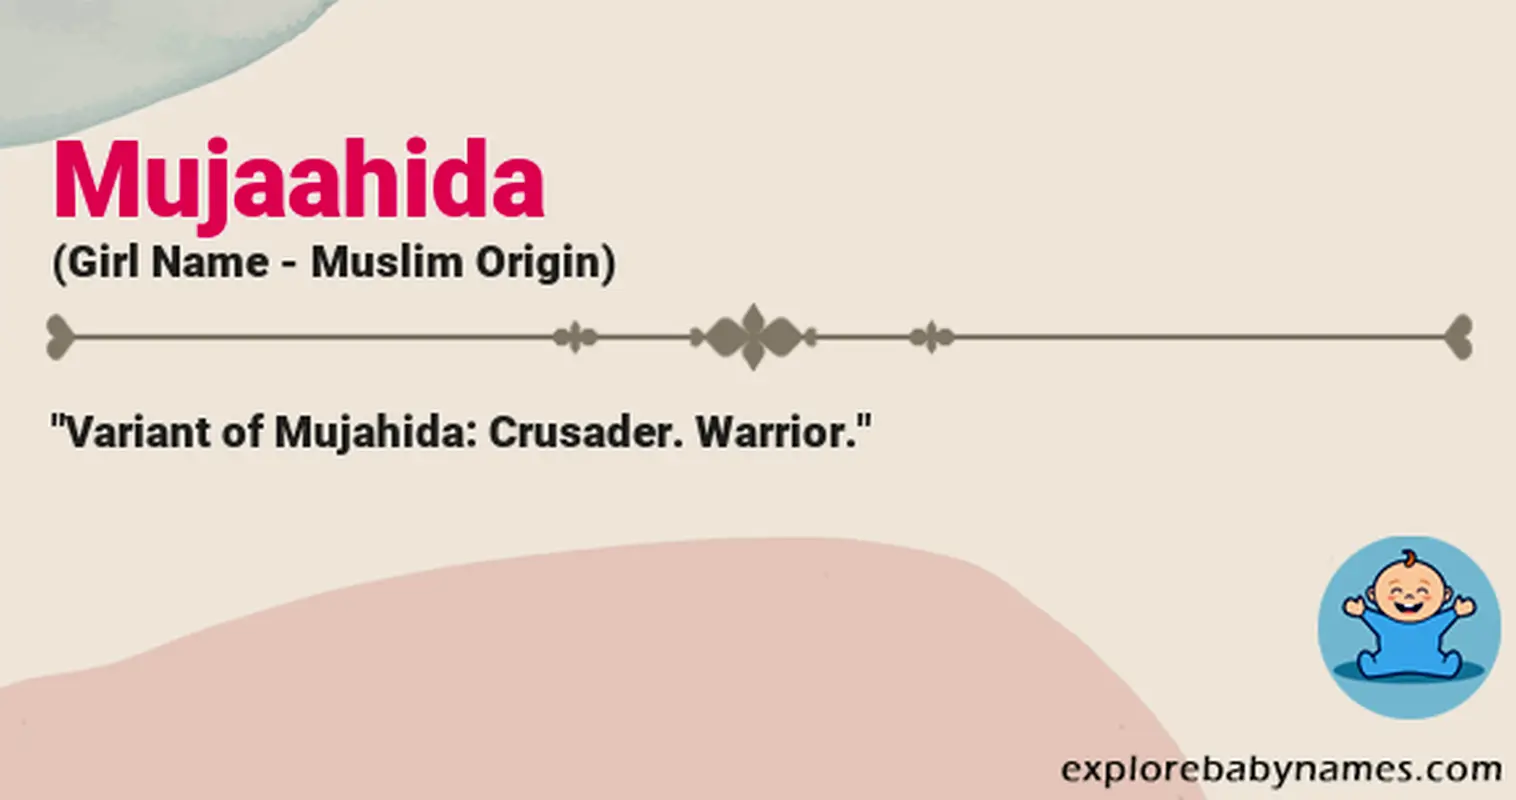 Meaning of Mujaahida